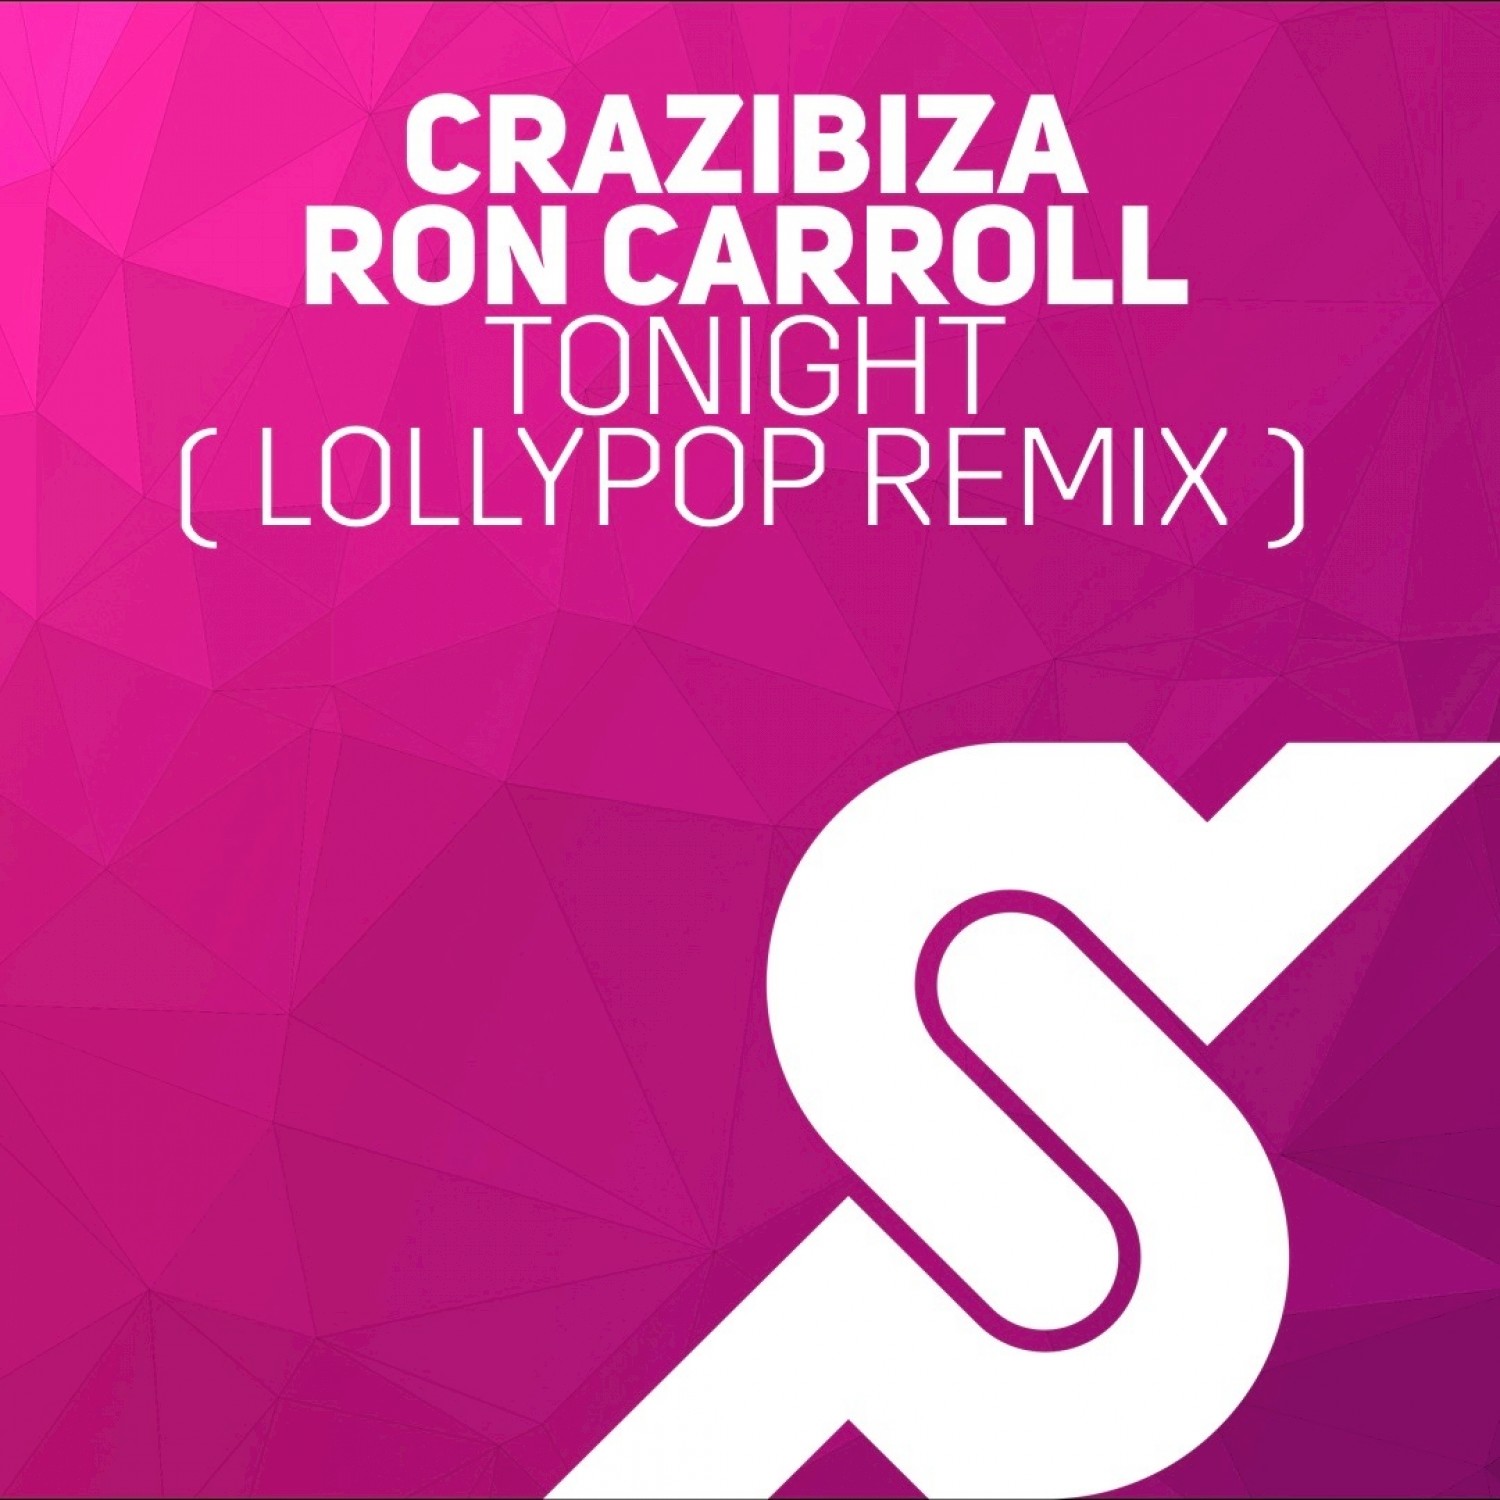 Tonight (Lollypop Remix)